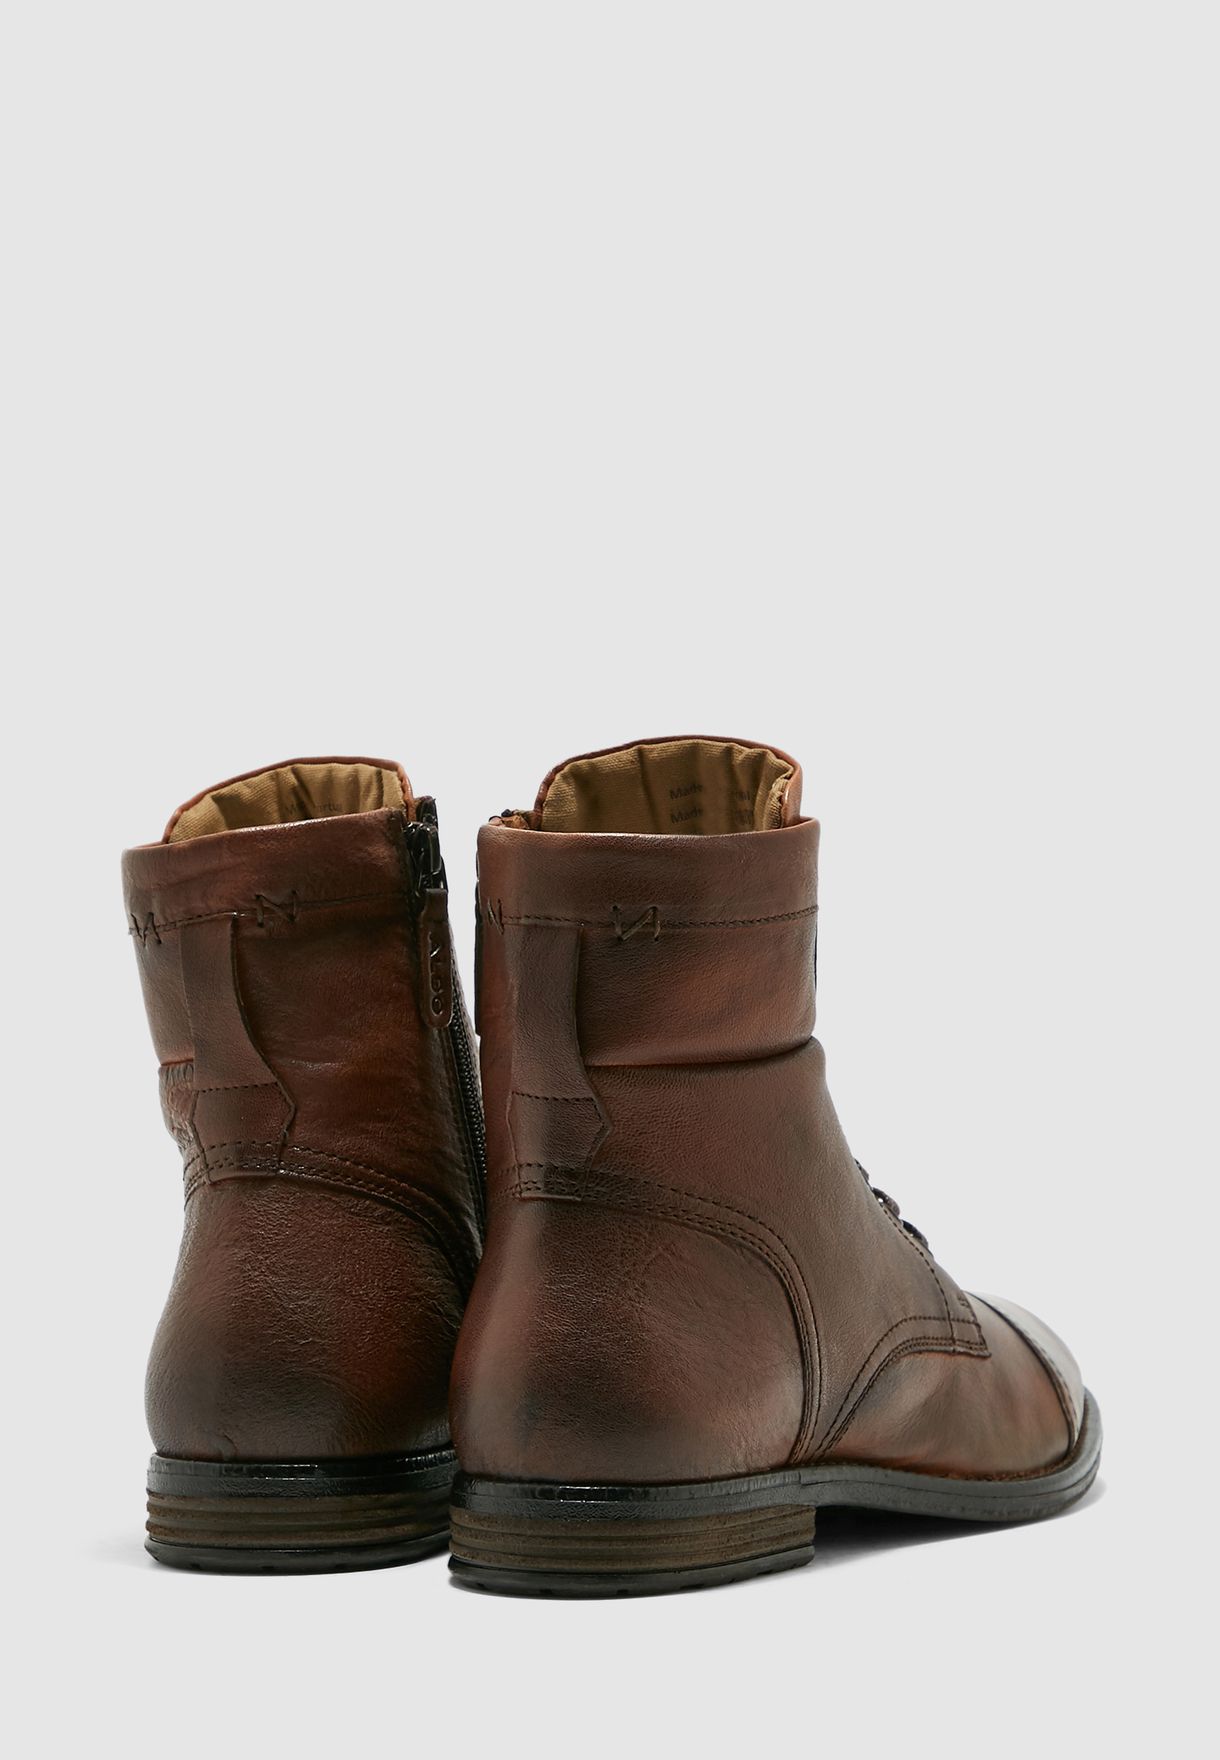 aldo men's snow boots